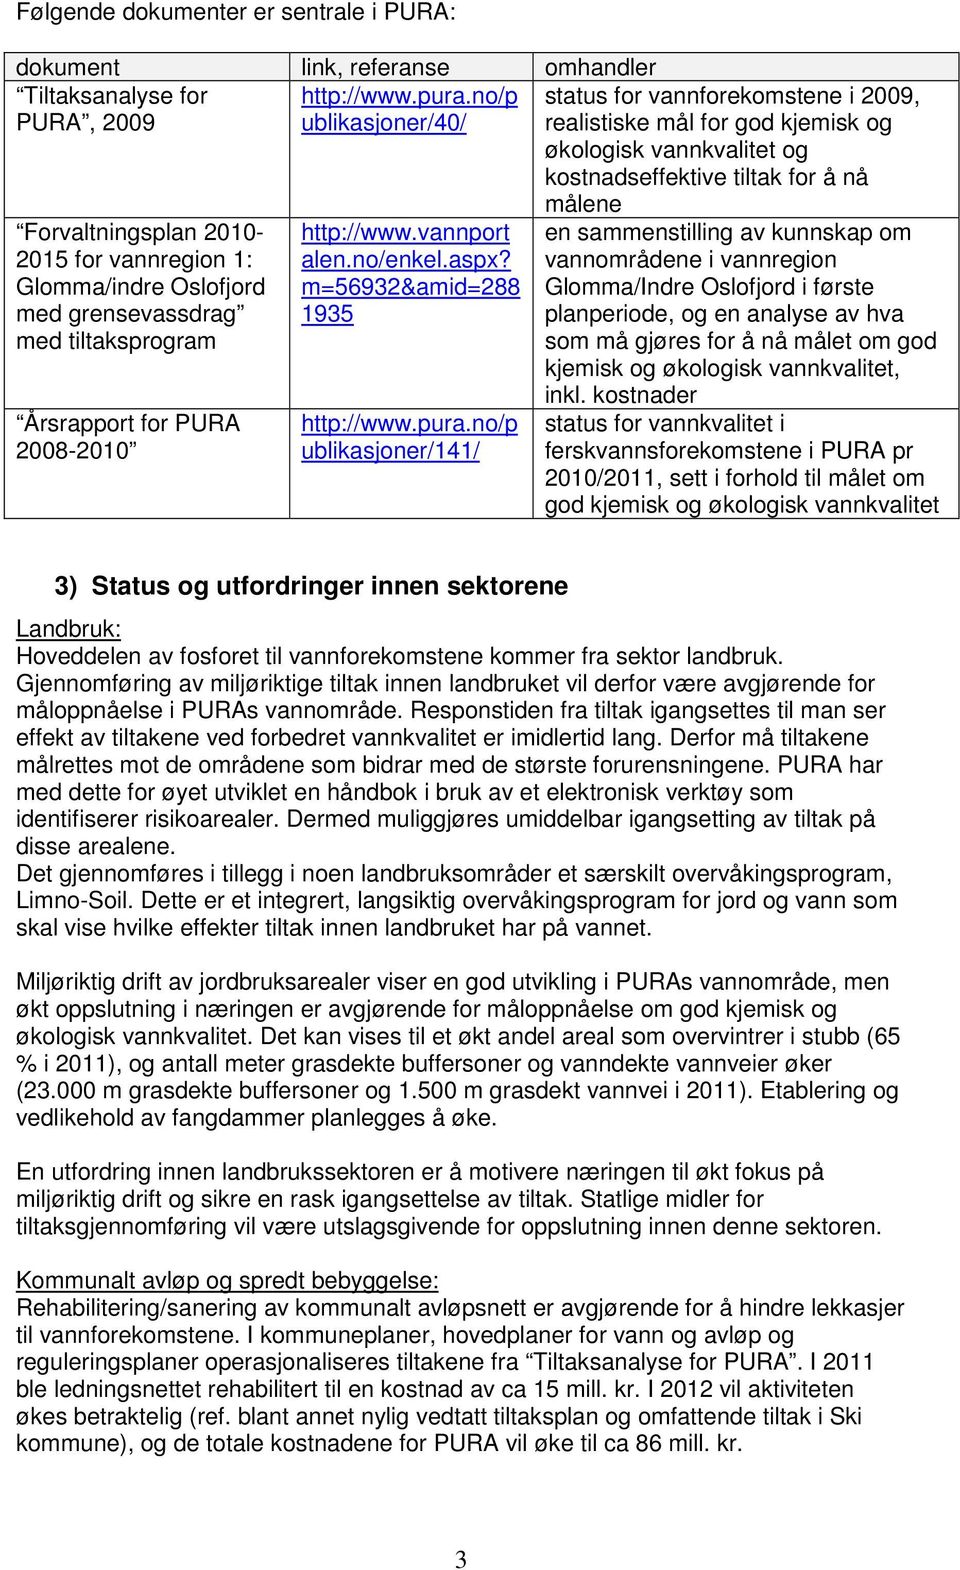 Glomma/indre Oslofjord med grensevassdrag med tiltaksprogram Årsrapport for PURA 2008-2010 http://www.vannport alen.no/enkel.aspx? m=56932&amid=288 1935 http://www.pura.